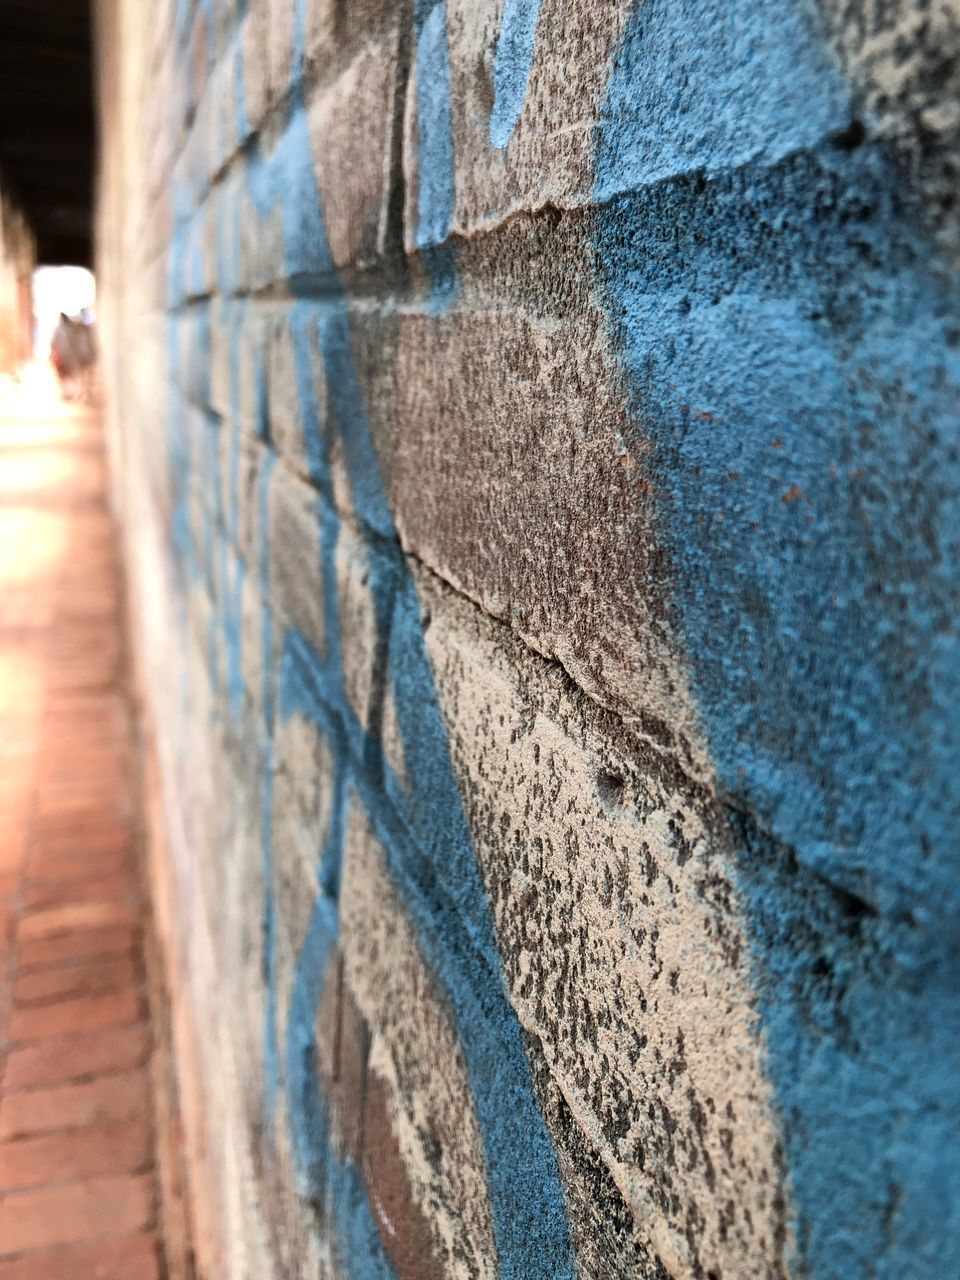 CLOSE-UP OF WALL WITH GRAFFITI